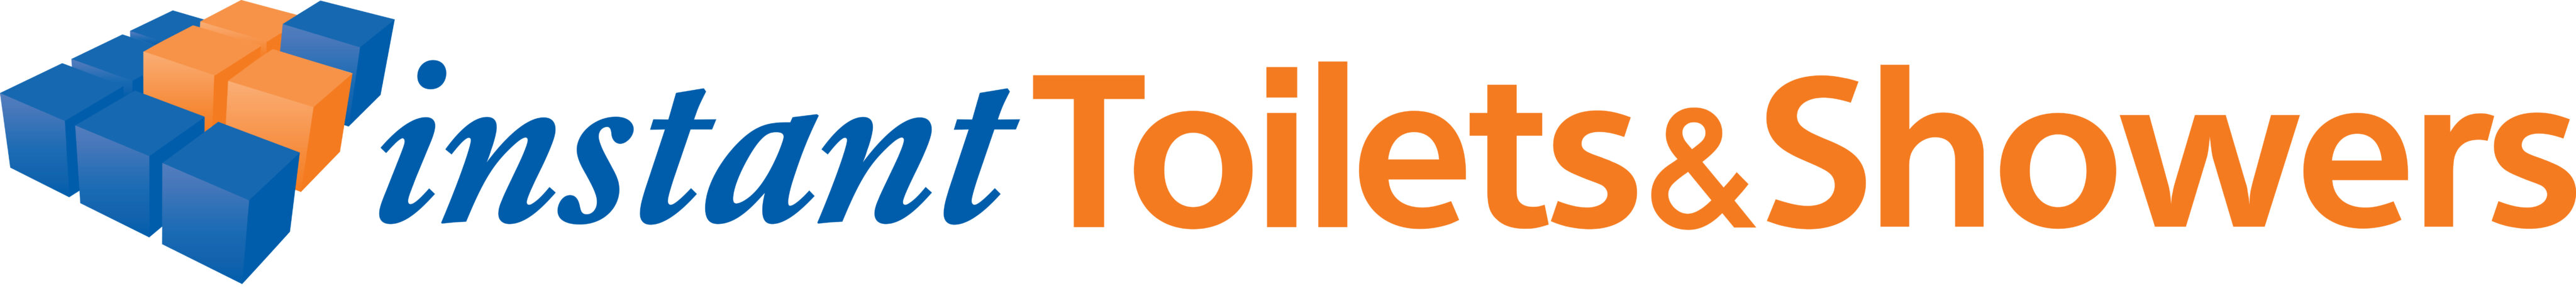 Instant Toilets & Showers Logo